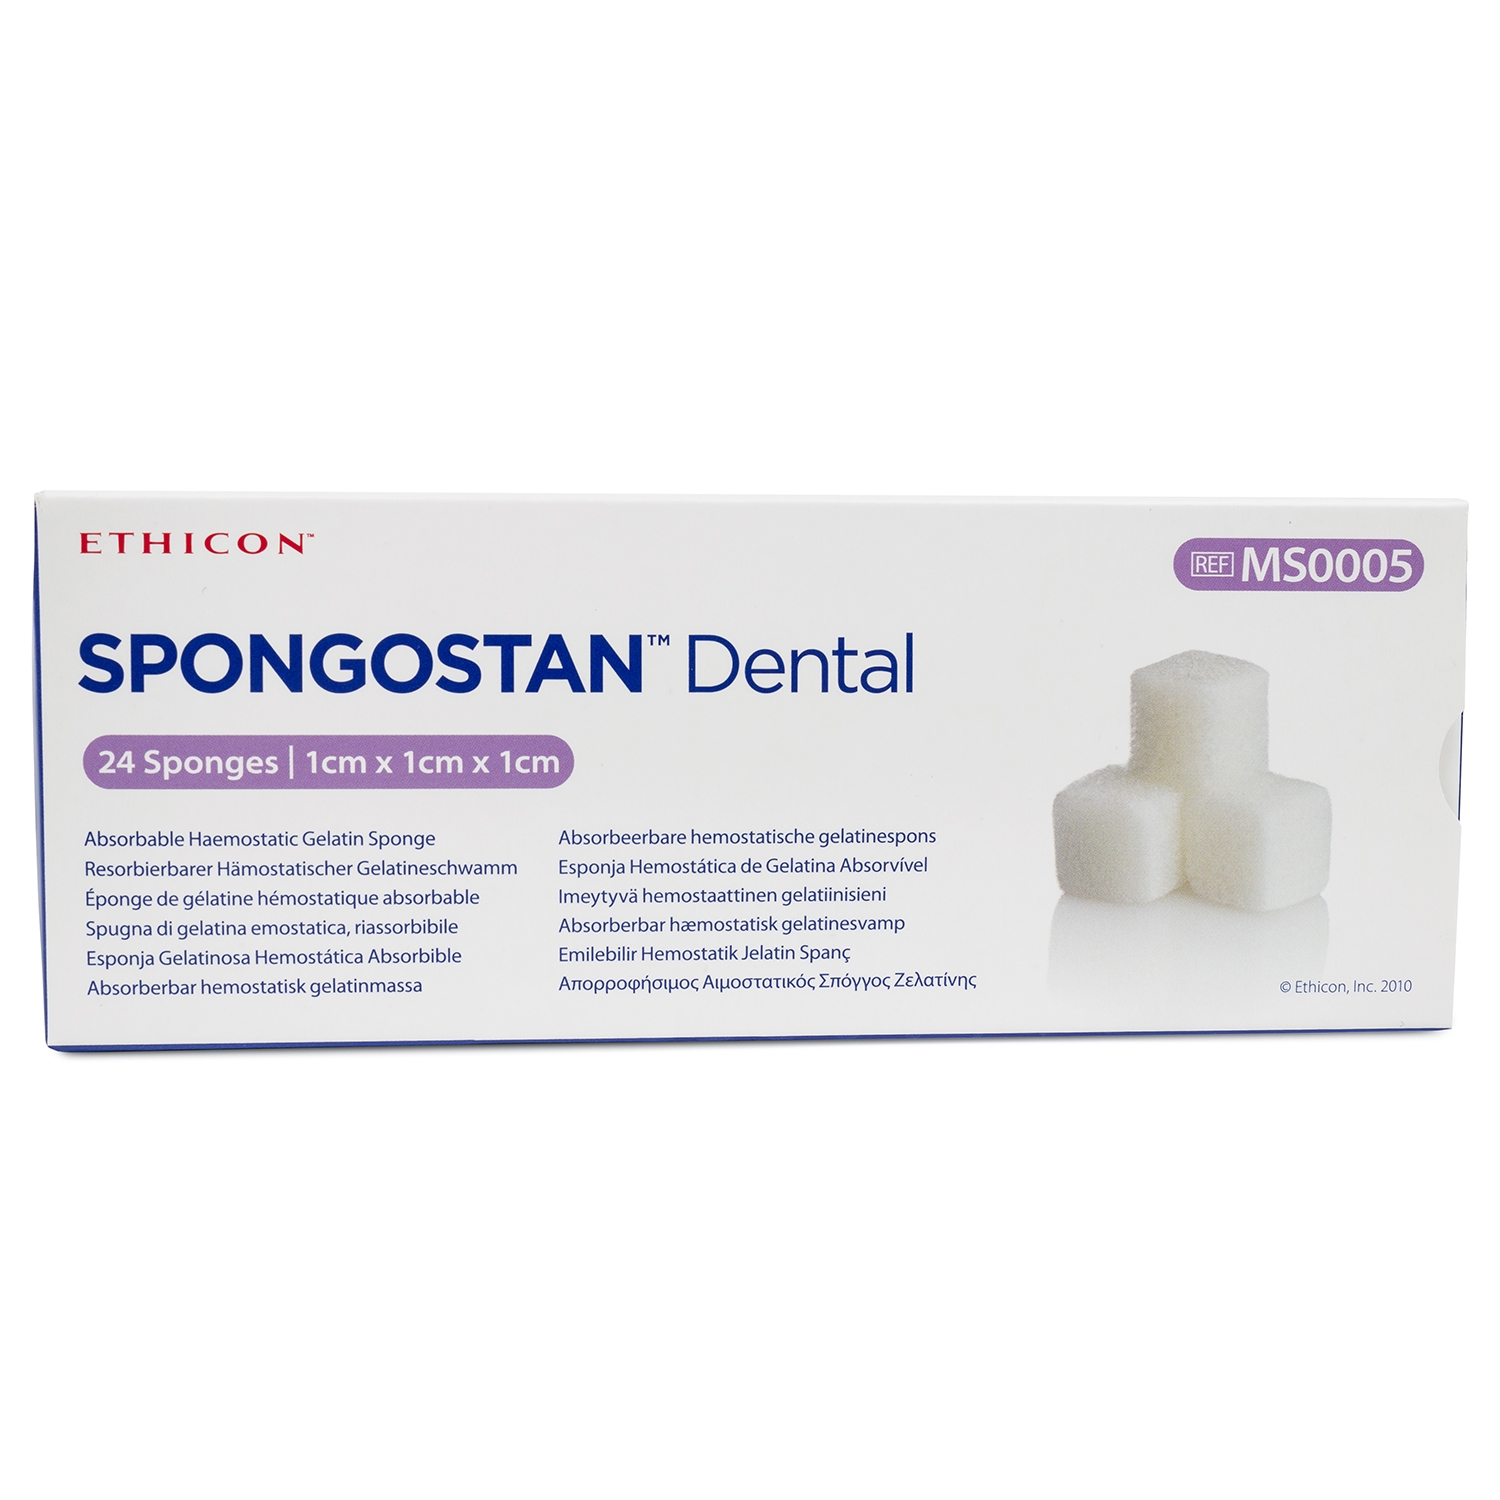 Spongostan dental - 10 x 10 x 10 mm (24 st)